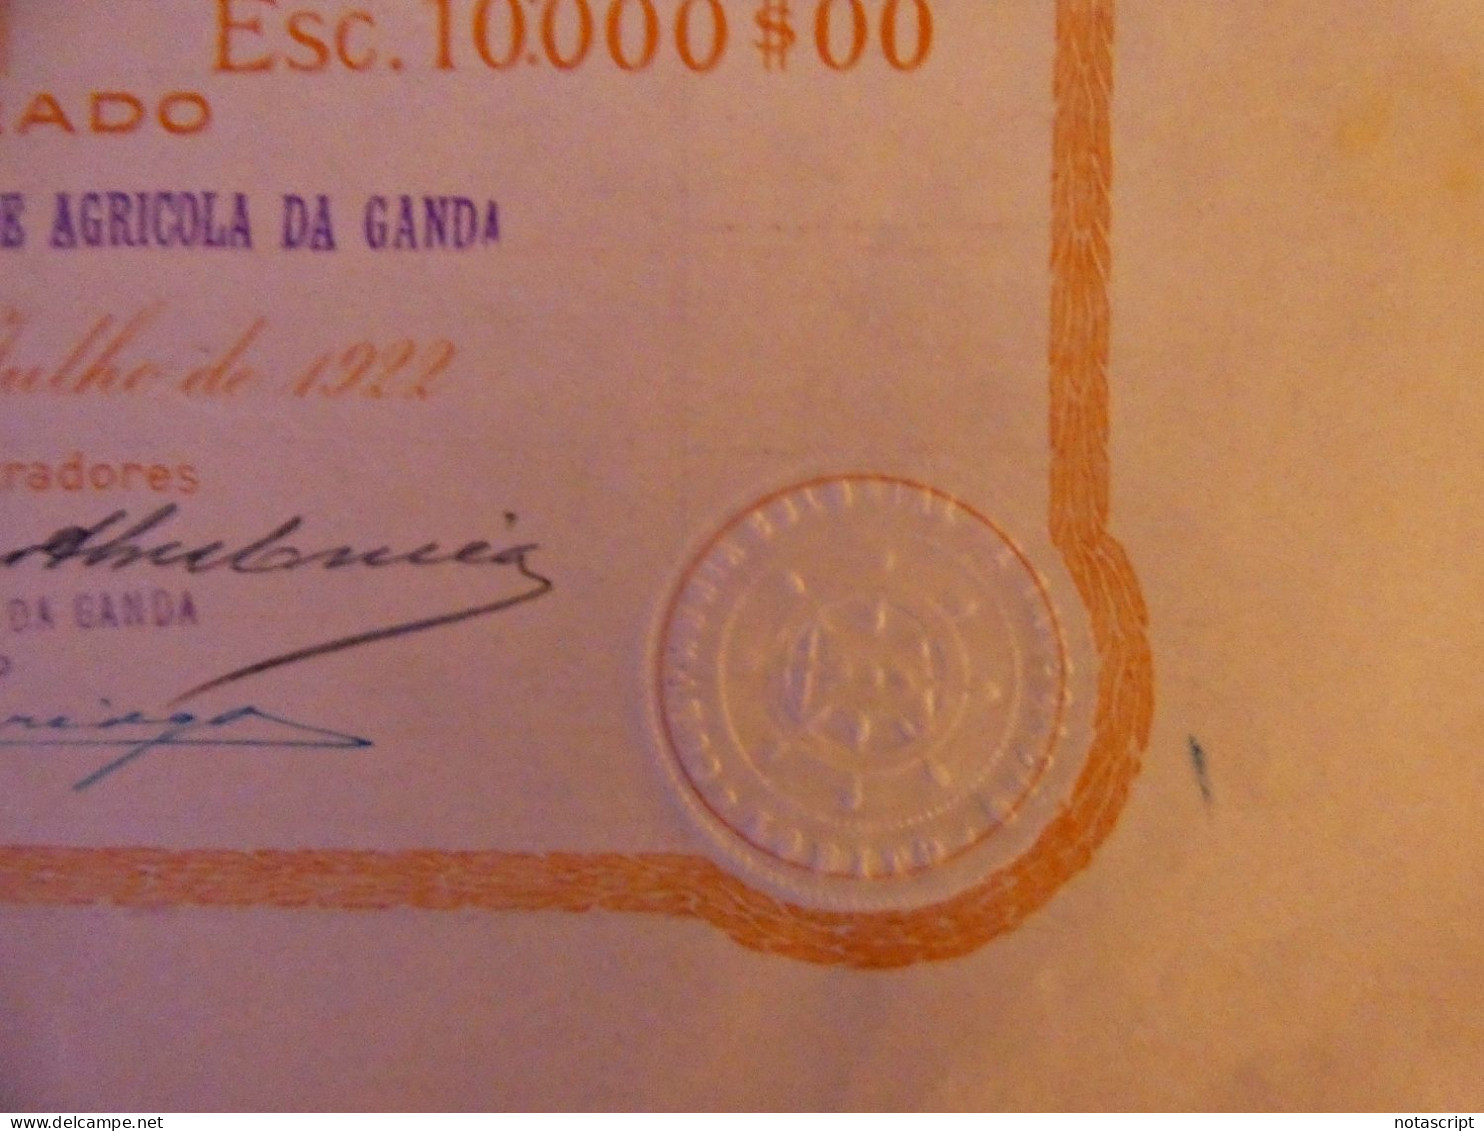 COMPANHIA COLONIAL  DE NAVEGAÇAO SA ,Lobito (Portuguese Angola)    1922 share Certificate - Navigazione